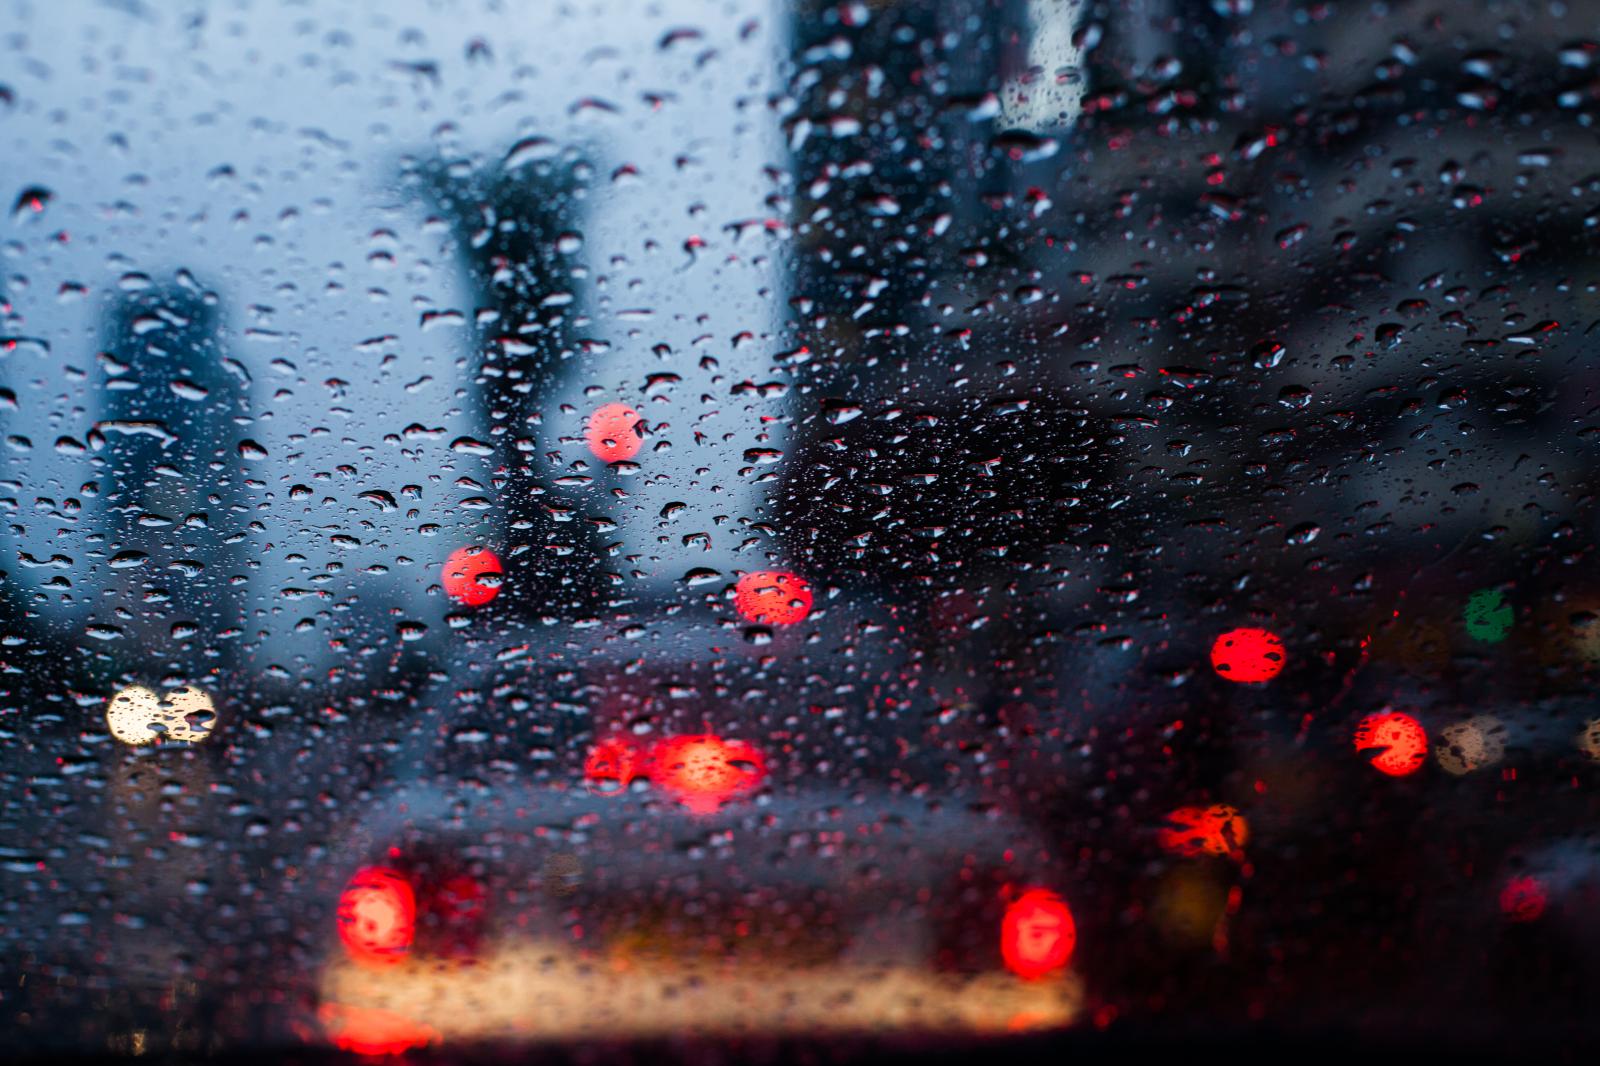 Night traffic at rainy evening. | Buy this image